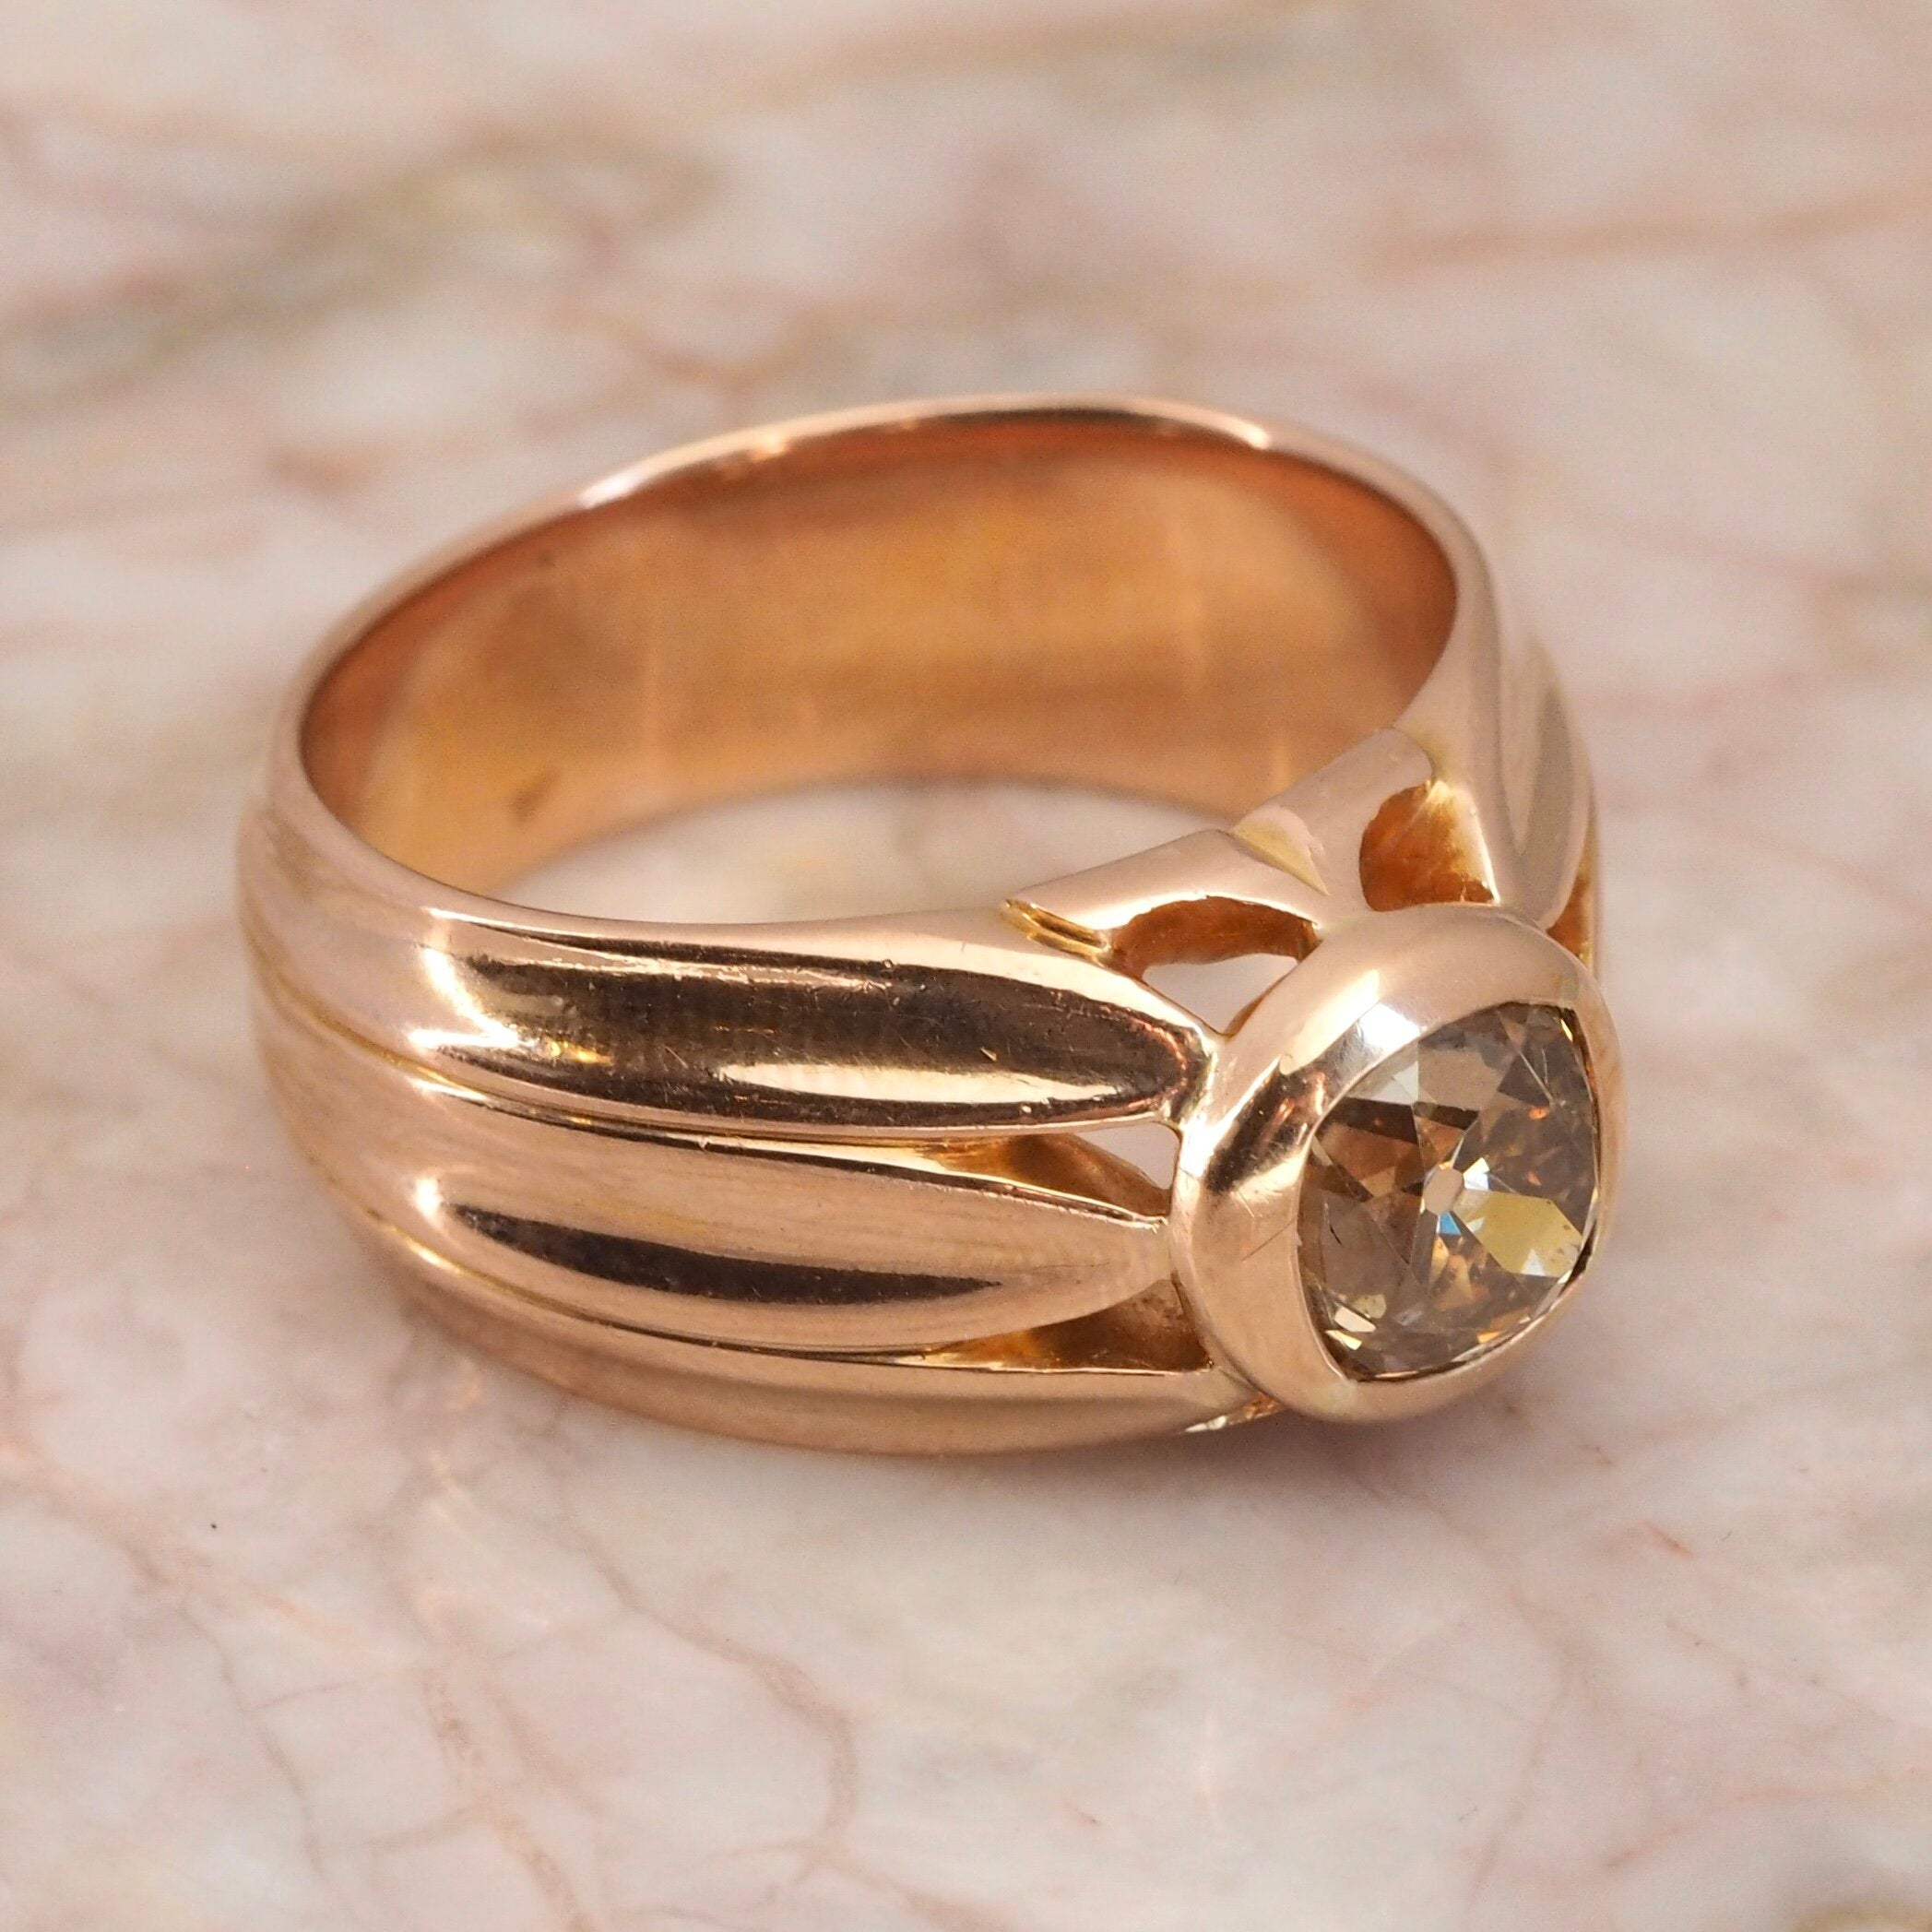 Antique Russian 18k Rose Gold Old Mine Cut DIamond Ring